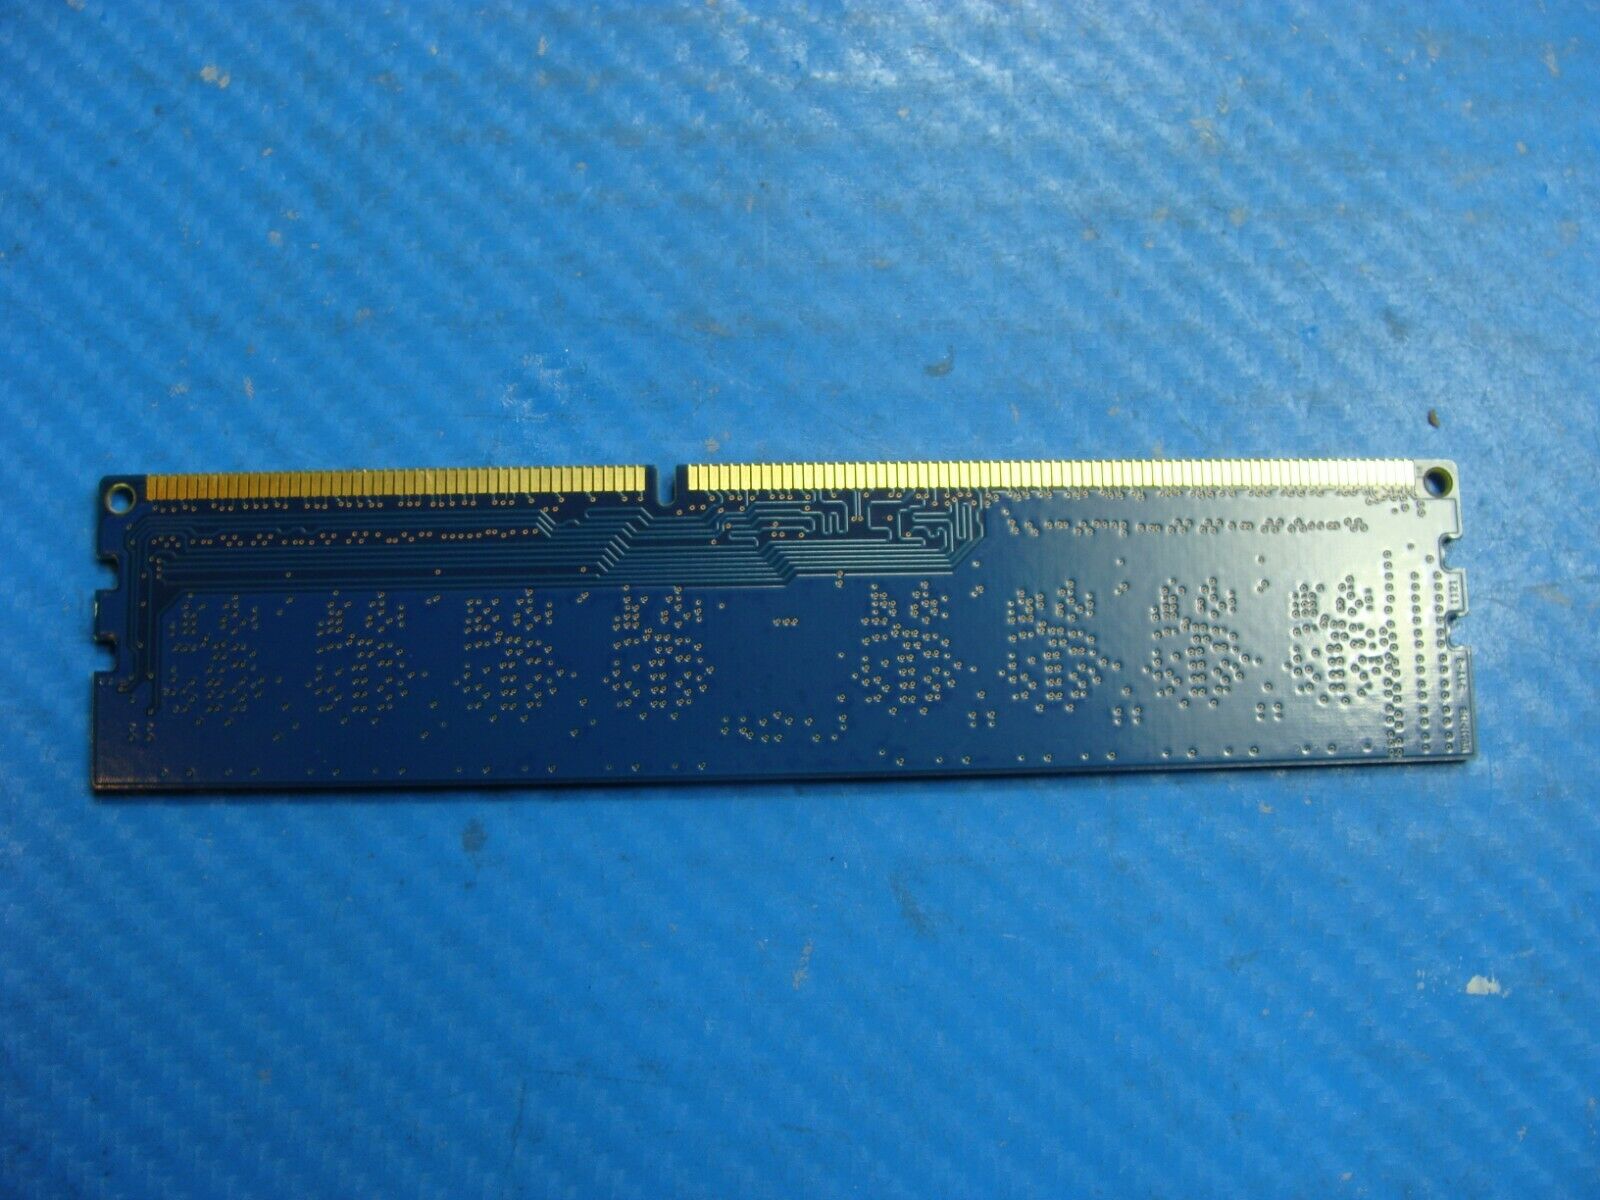 Dell 8300 Nanya 2GB 1Rx8 PC3-10600U DIMM Memory RAM NT2GC64B880NF-CG #1 Nanya